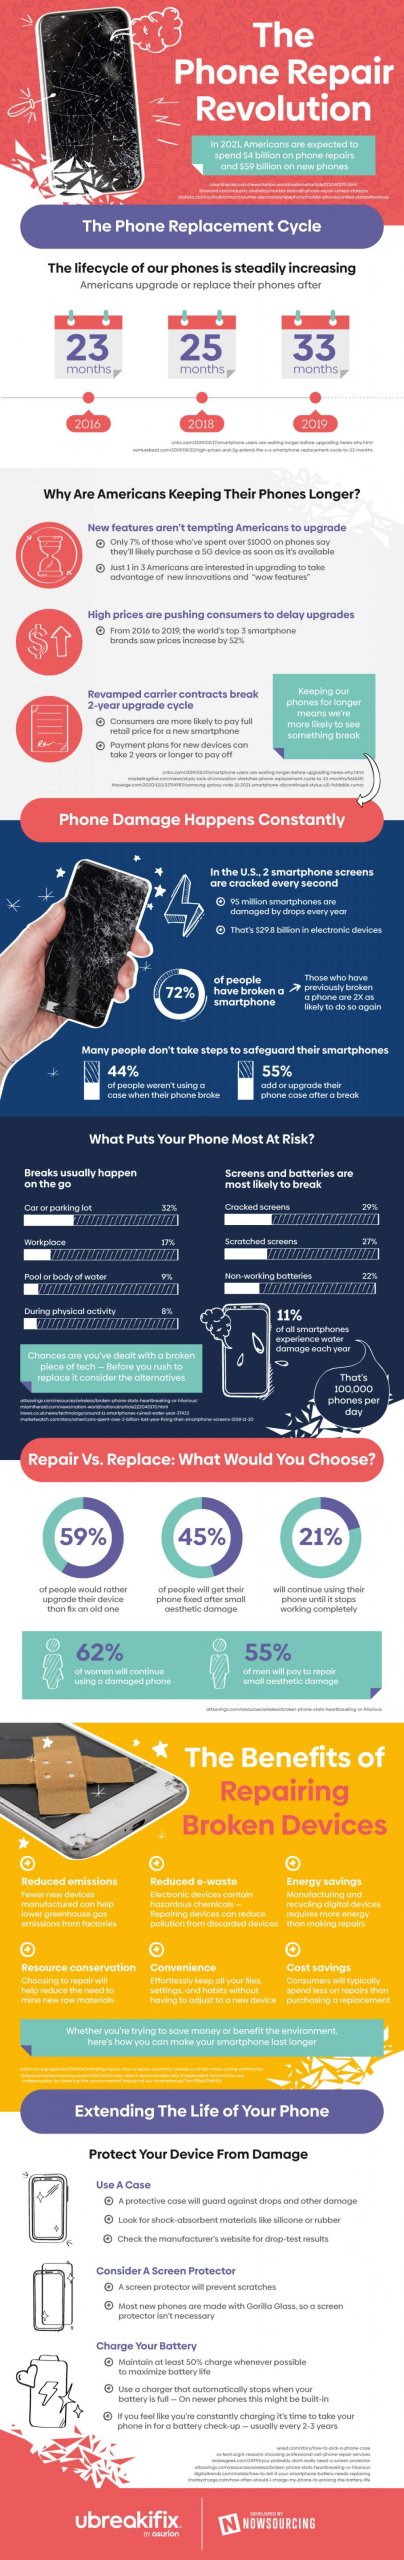 Phone Repair Economy